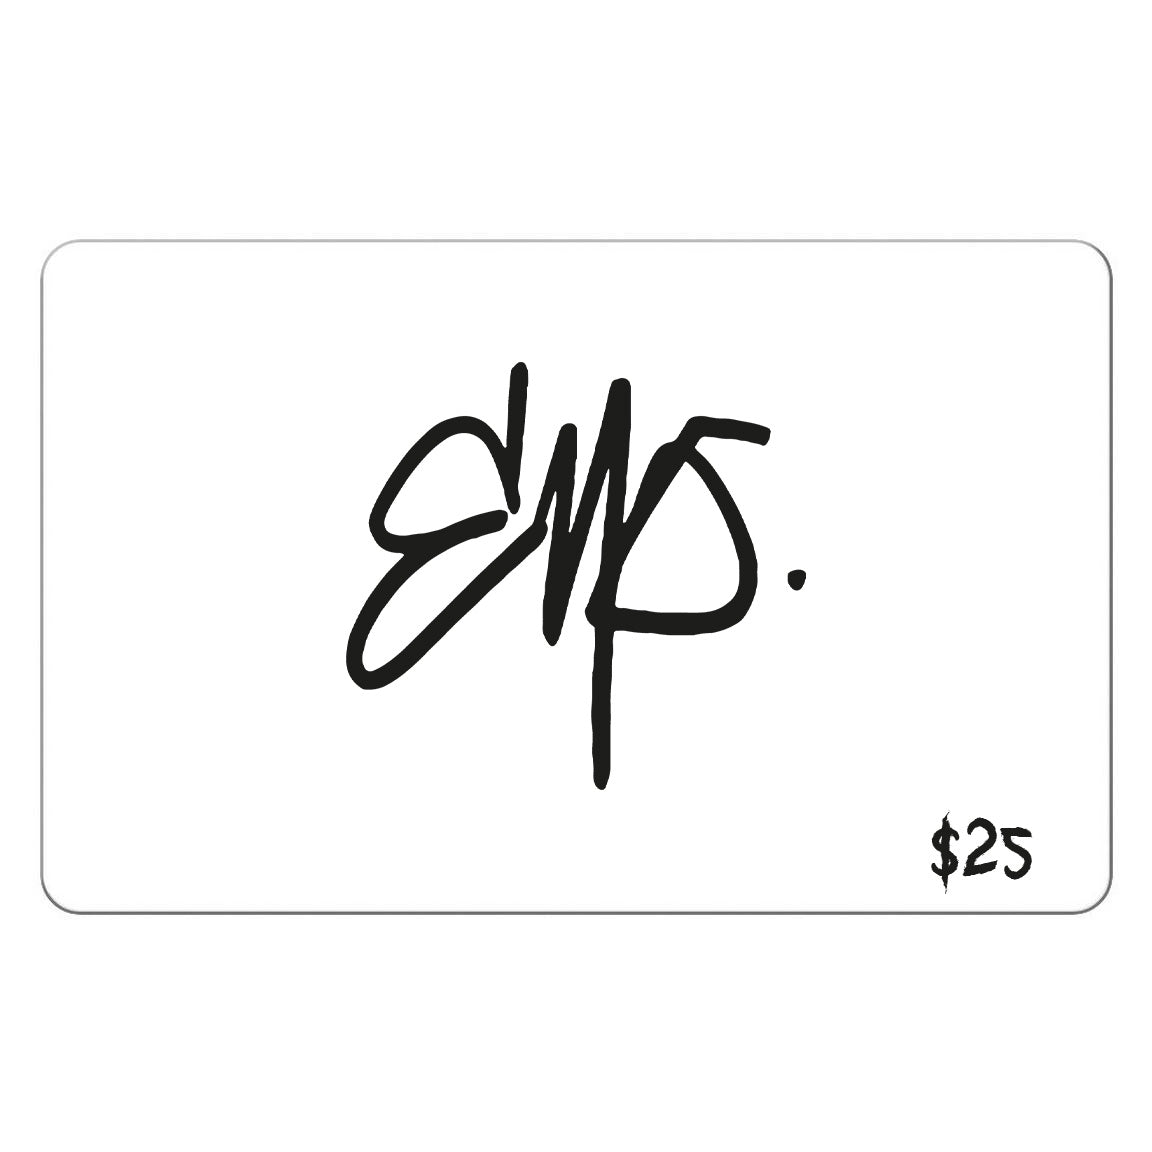 END signature logo gift card - $25